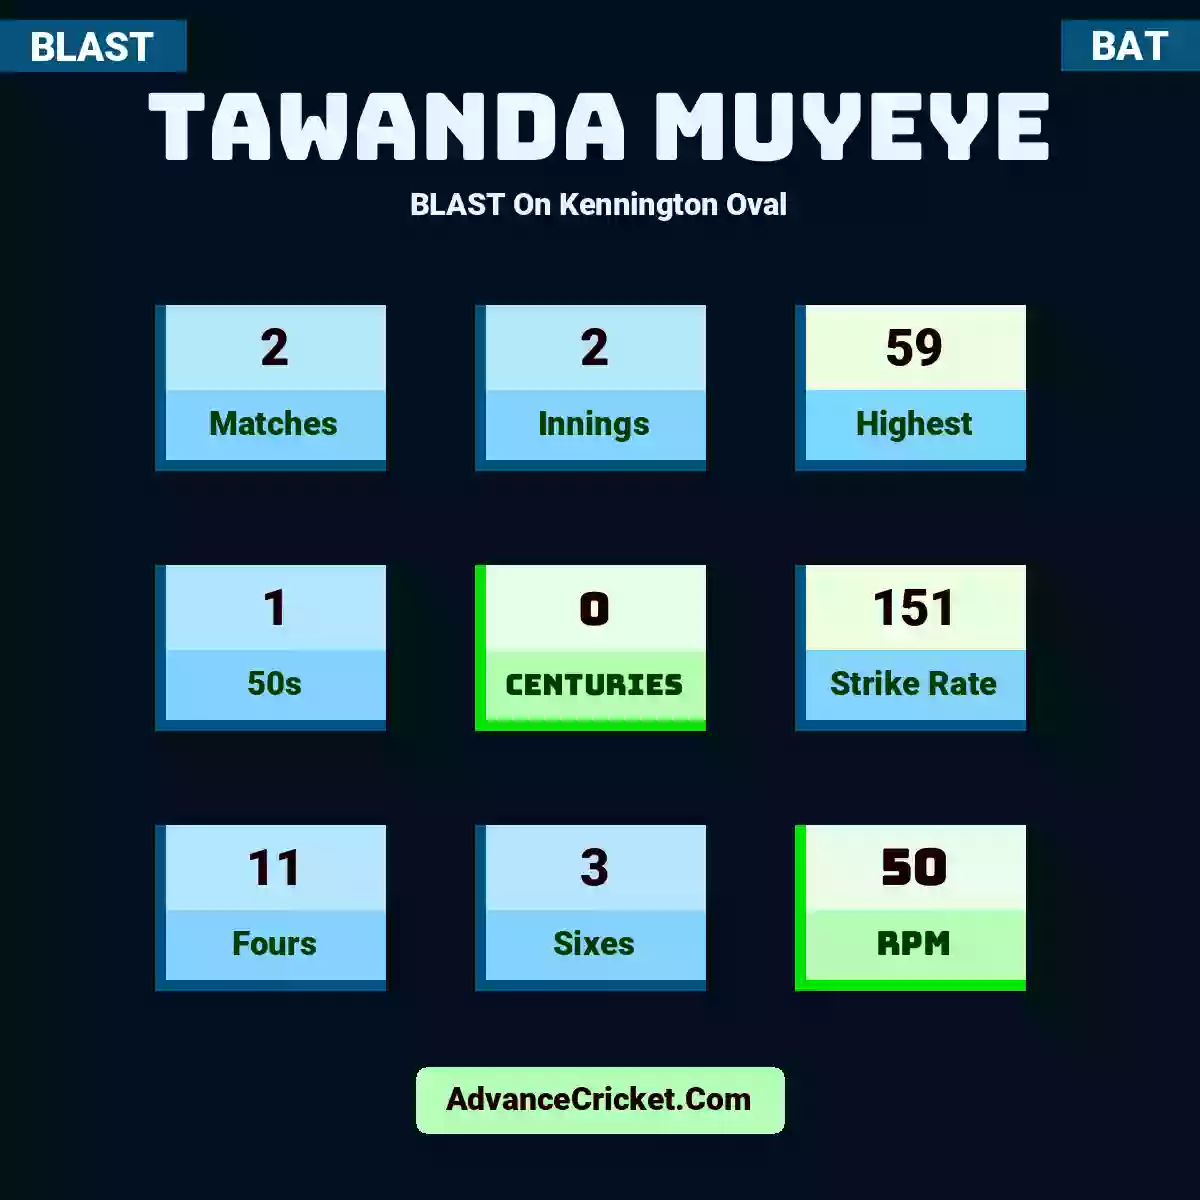 Tawanda Muyeye BLAST  On Kennington Oval, Tawanda Muyeye played 2 matches, scored 59 runs as highest, 1 half-centuries, and 0 centuries, with a strike rate of 151. T.Muyeye hit 11 fours and 3 sixes, with an RPM of 50.